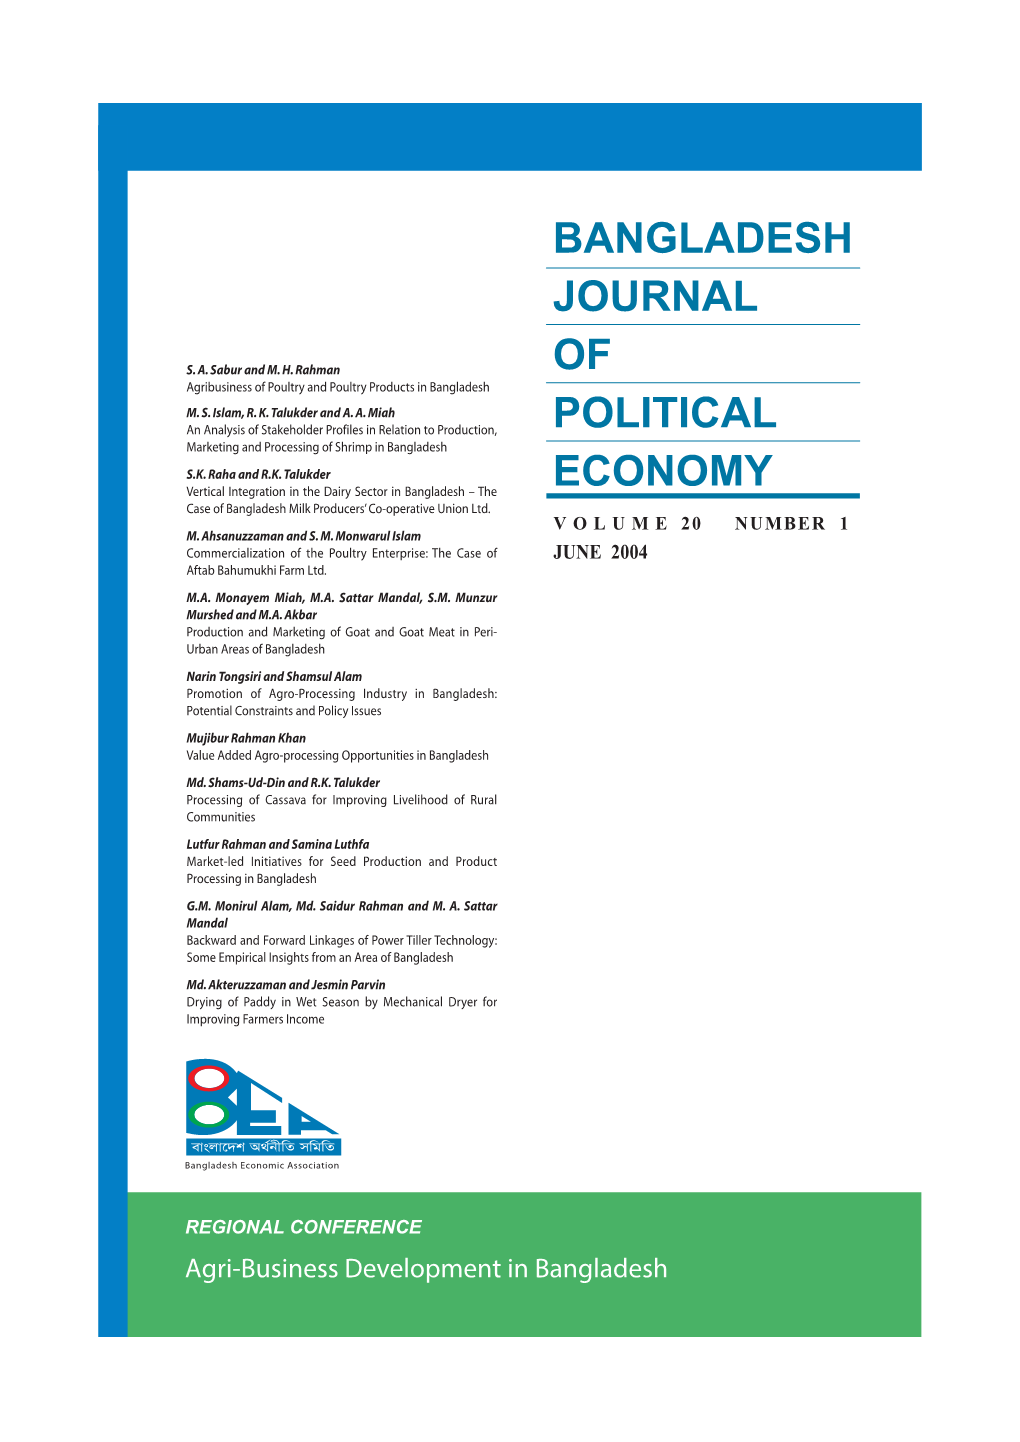 Bangladesh Journal of Political Economy VOLUME 20, NUMBER 1, JUNE 2004